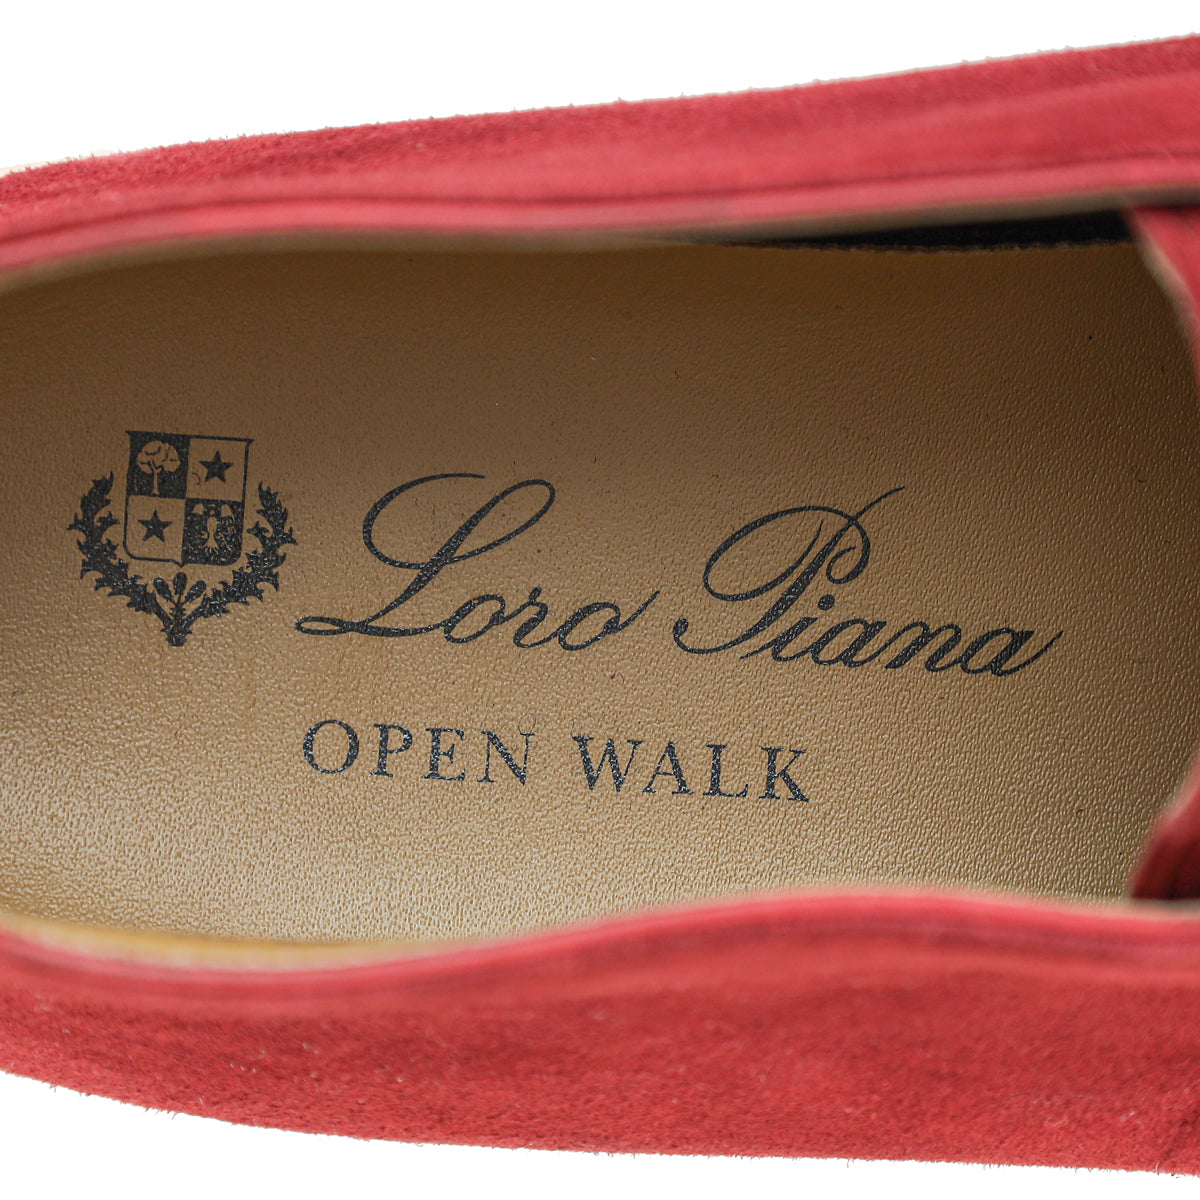 Loro Piana Dark Red Suede Open Walk Chukka Boots 38